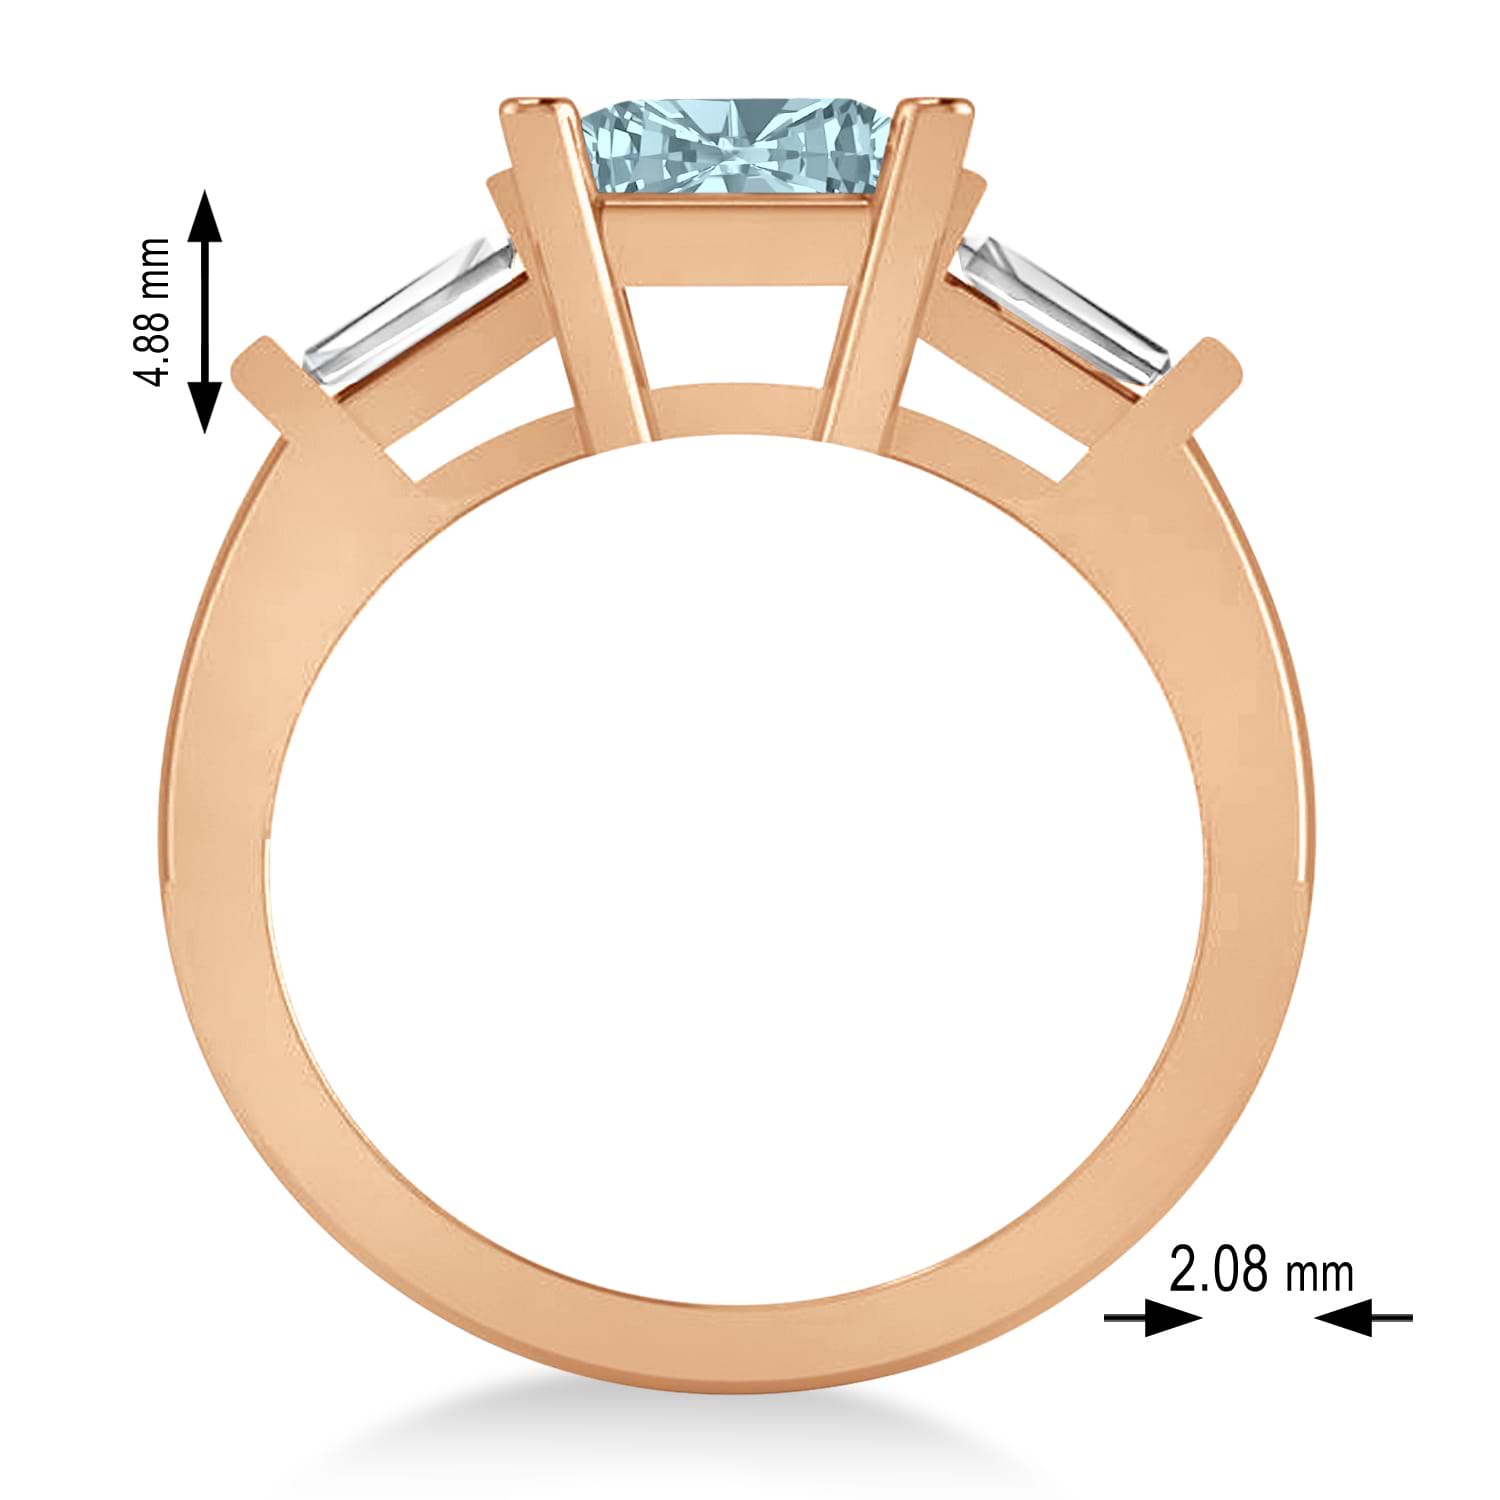 Aquamarine & Diamond Three-Stone Radiant Ring 14k Rose Gold (2.12ct)